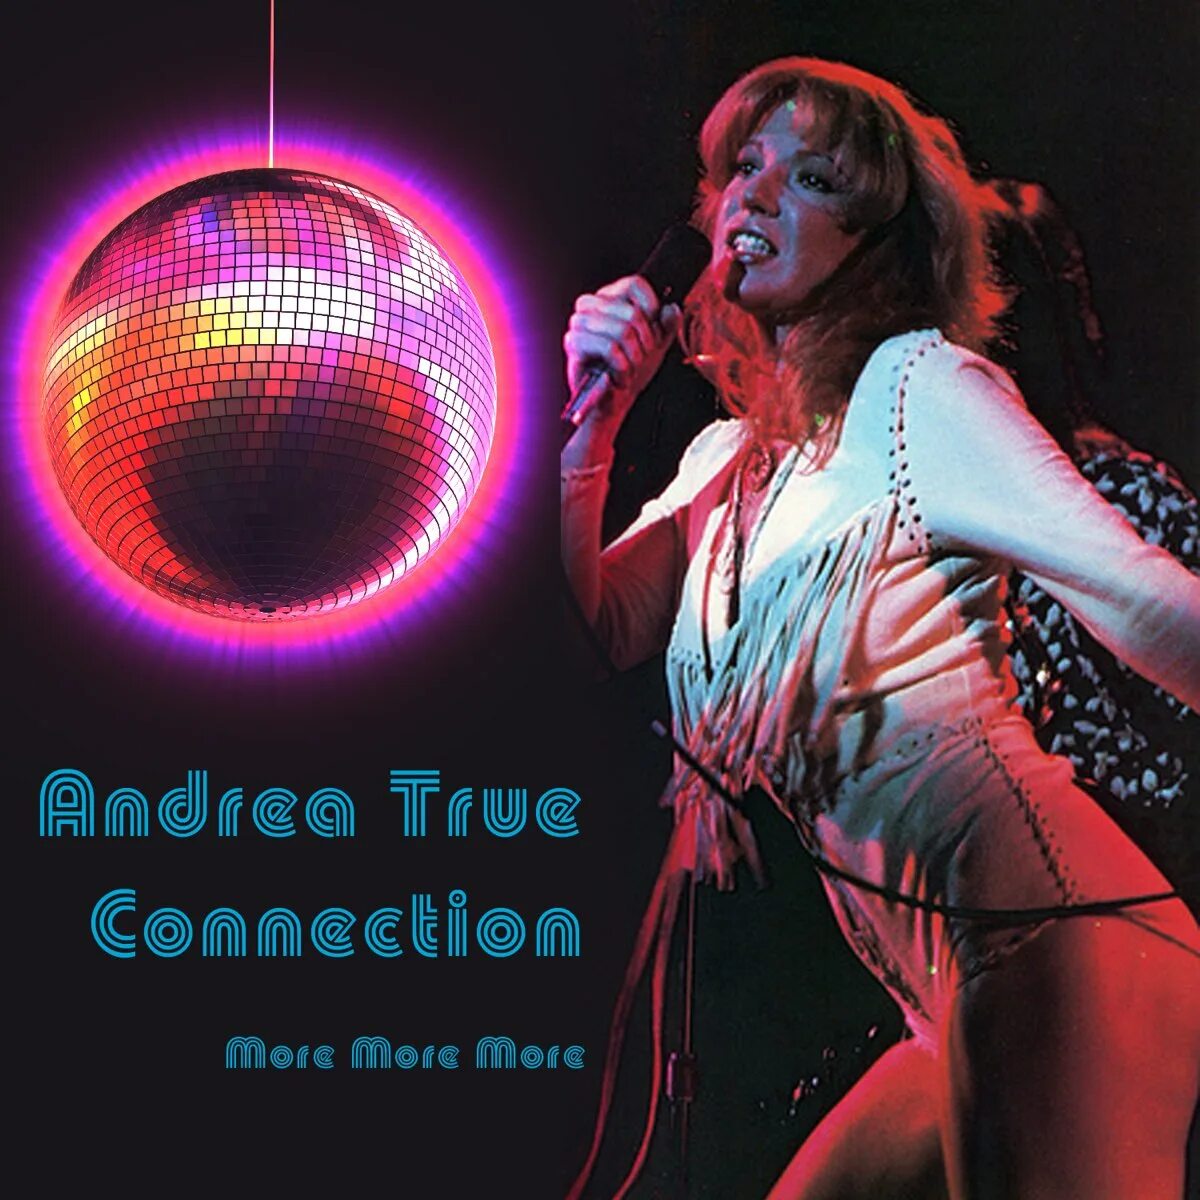 Английская песня more more. Андреа труе. Andrea true connection more more more 1976. Andrea true connection more, more, more. Андреа тру Коннекшн.